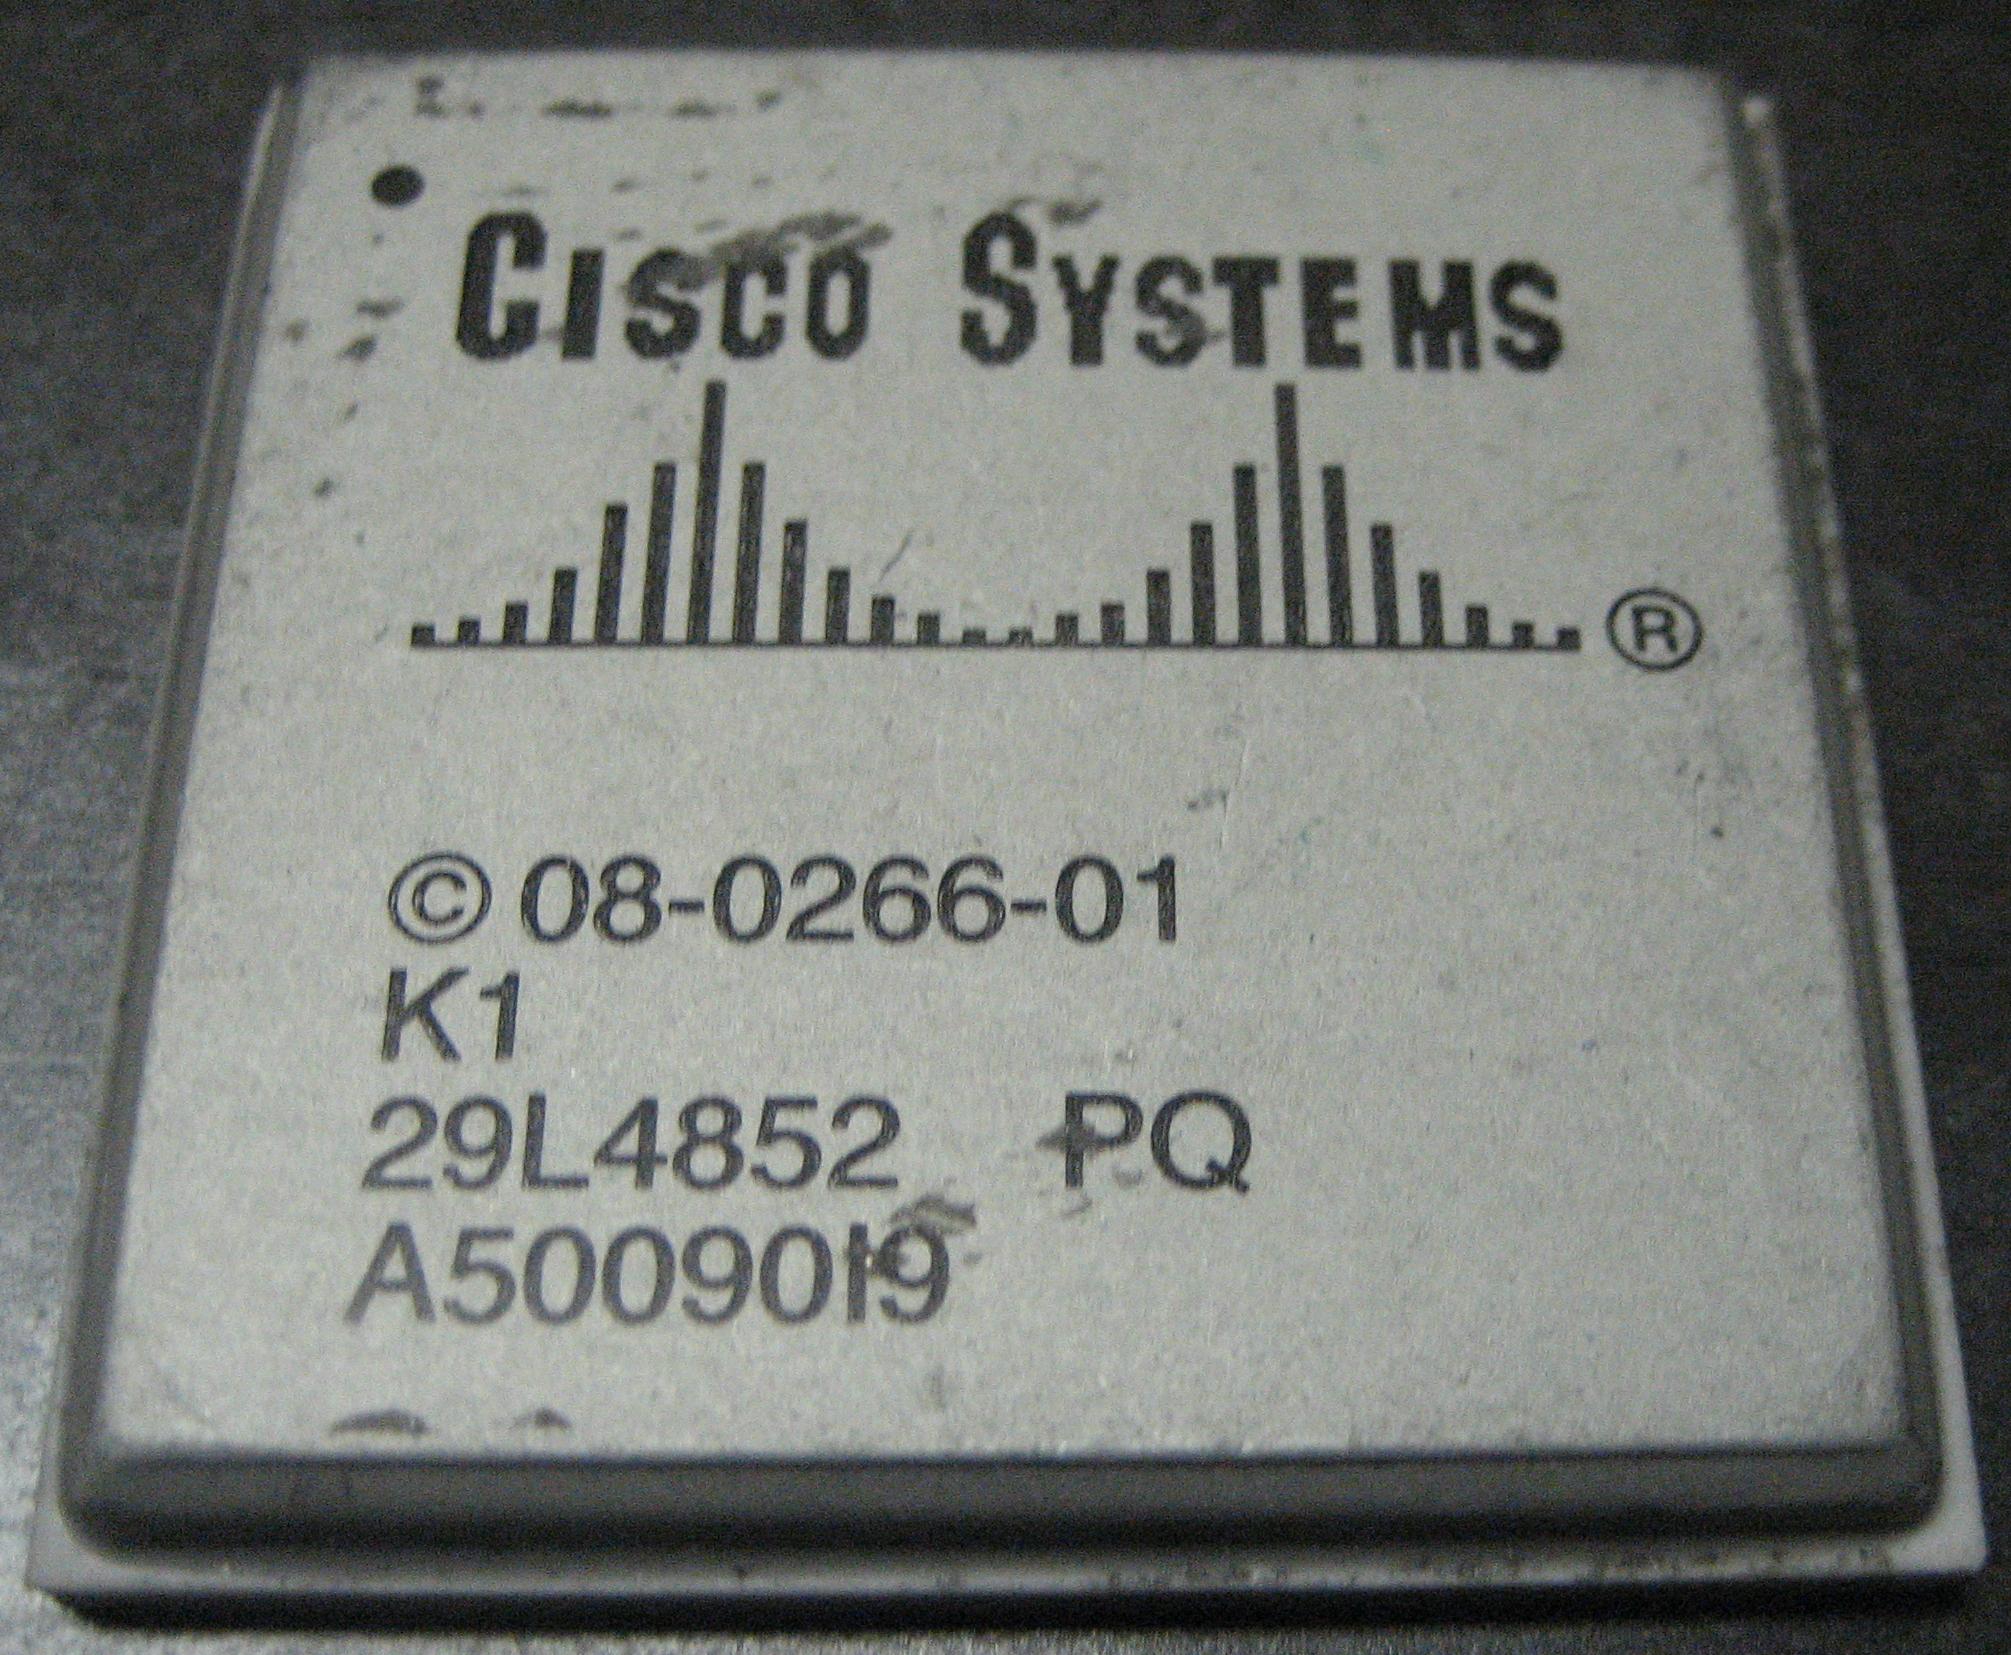 image:cisco_systems_08-0266-01.jpg